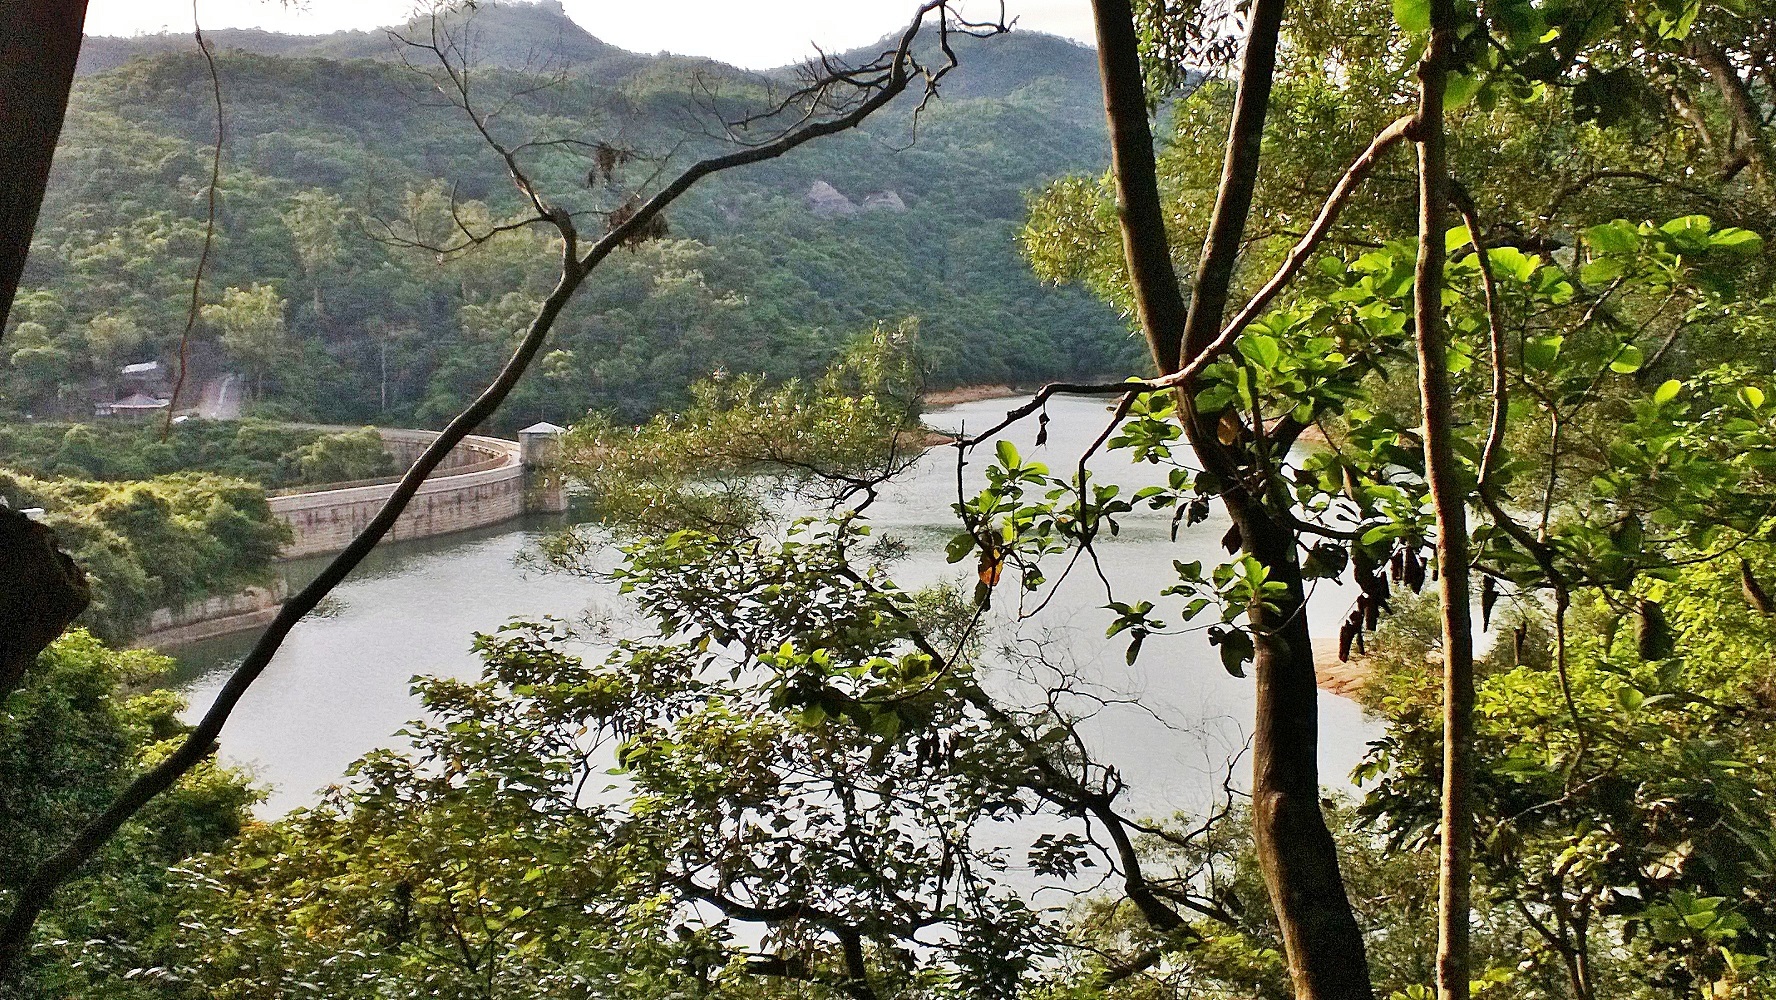 Main Dam Valve House and the Main Dam of Kowloon Reservoir